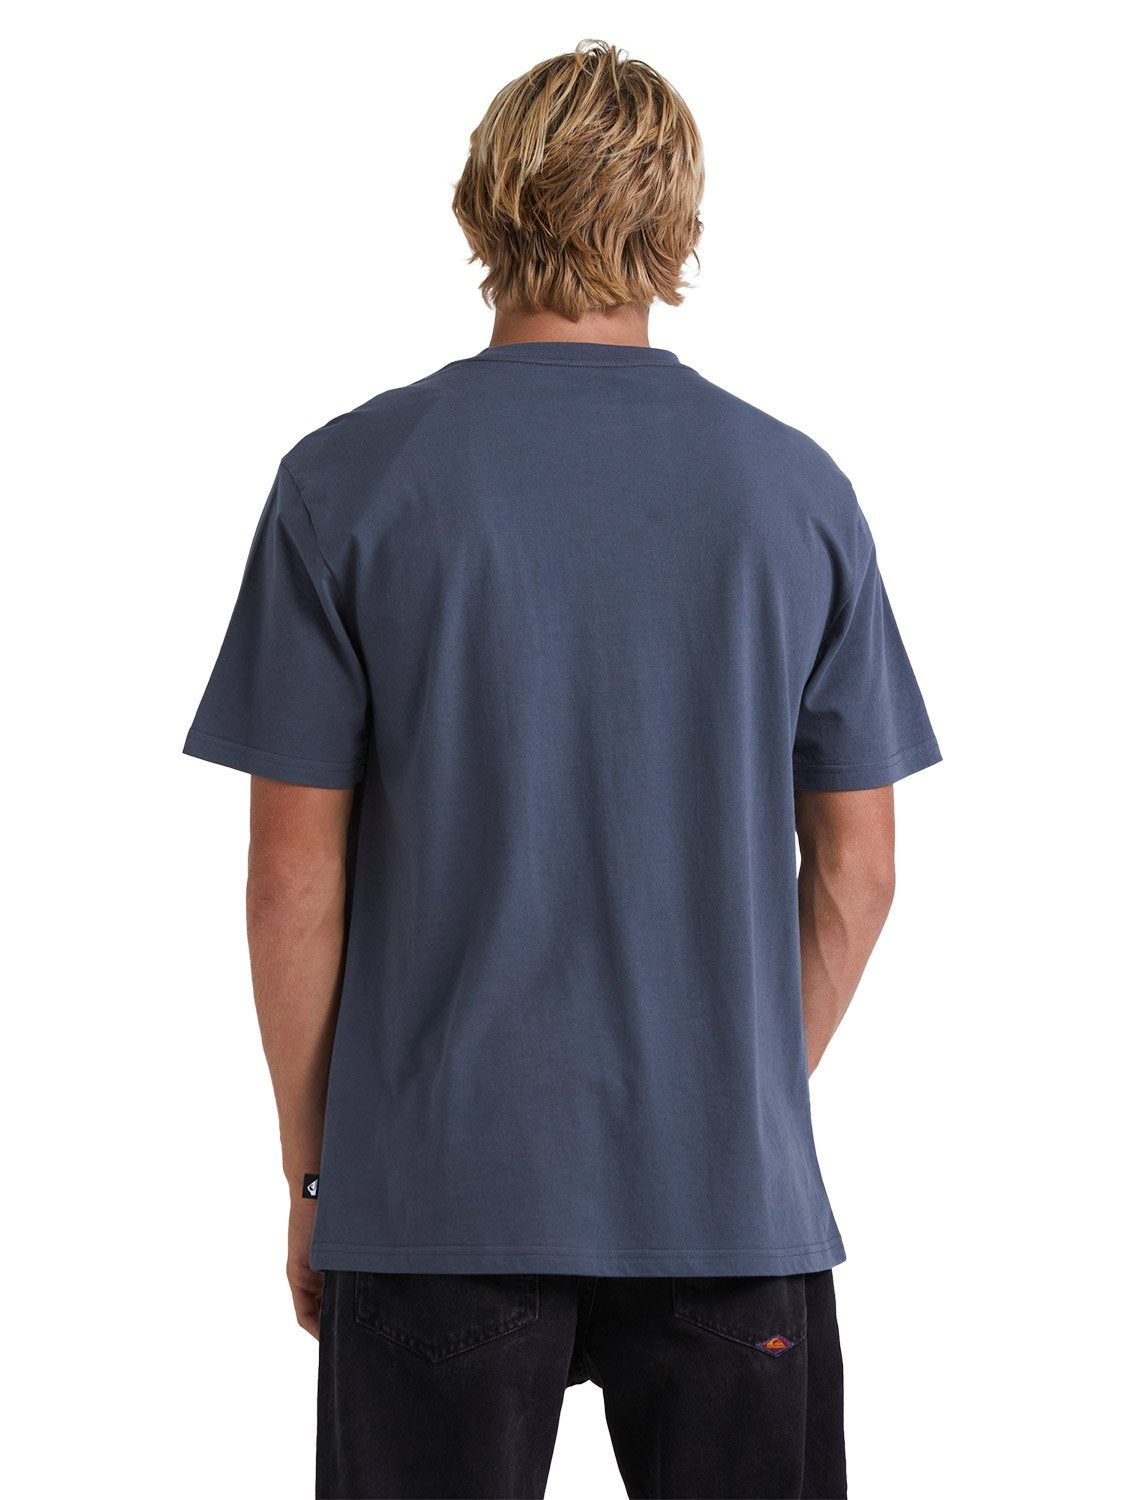 Quiksilver Men's Throwback T-Shirt